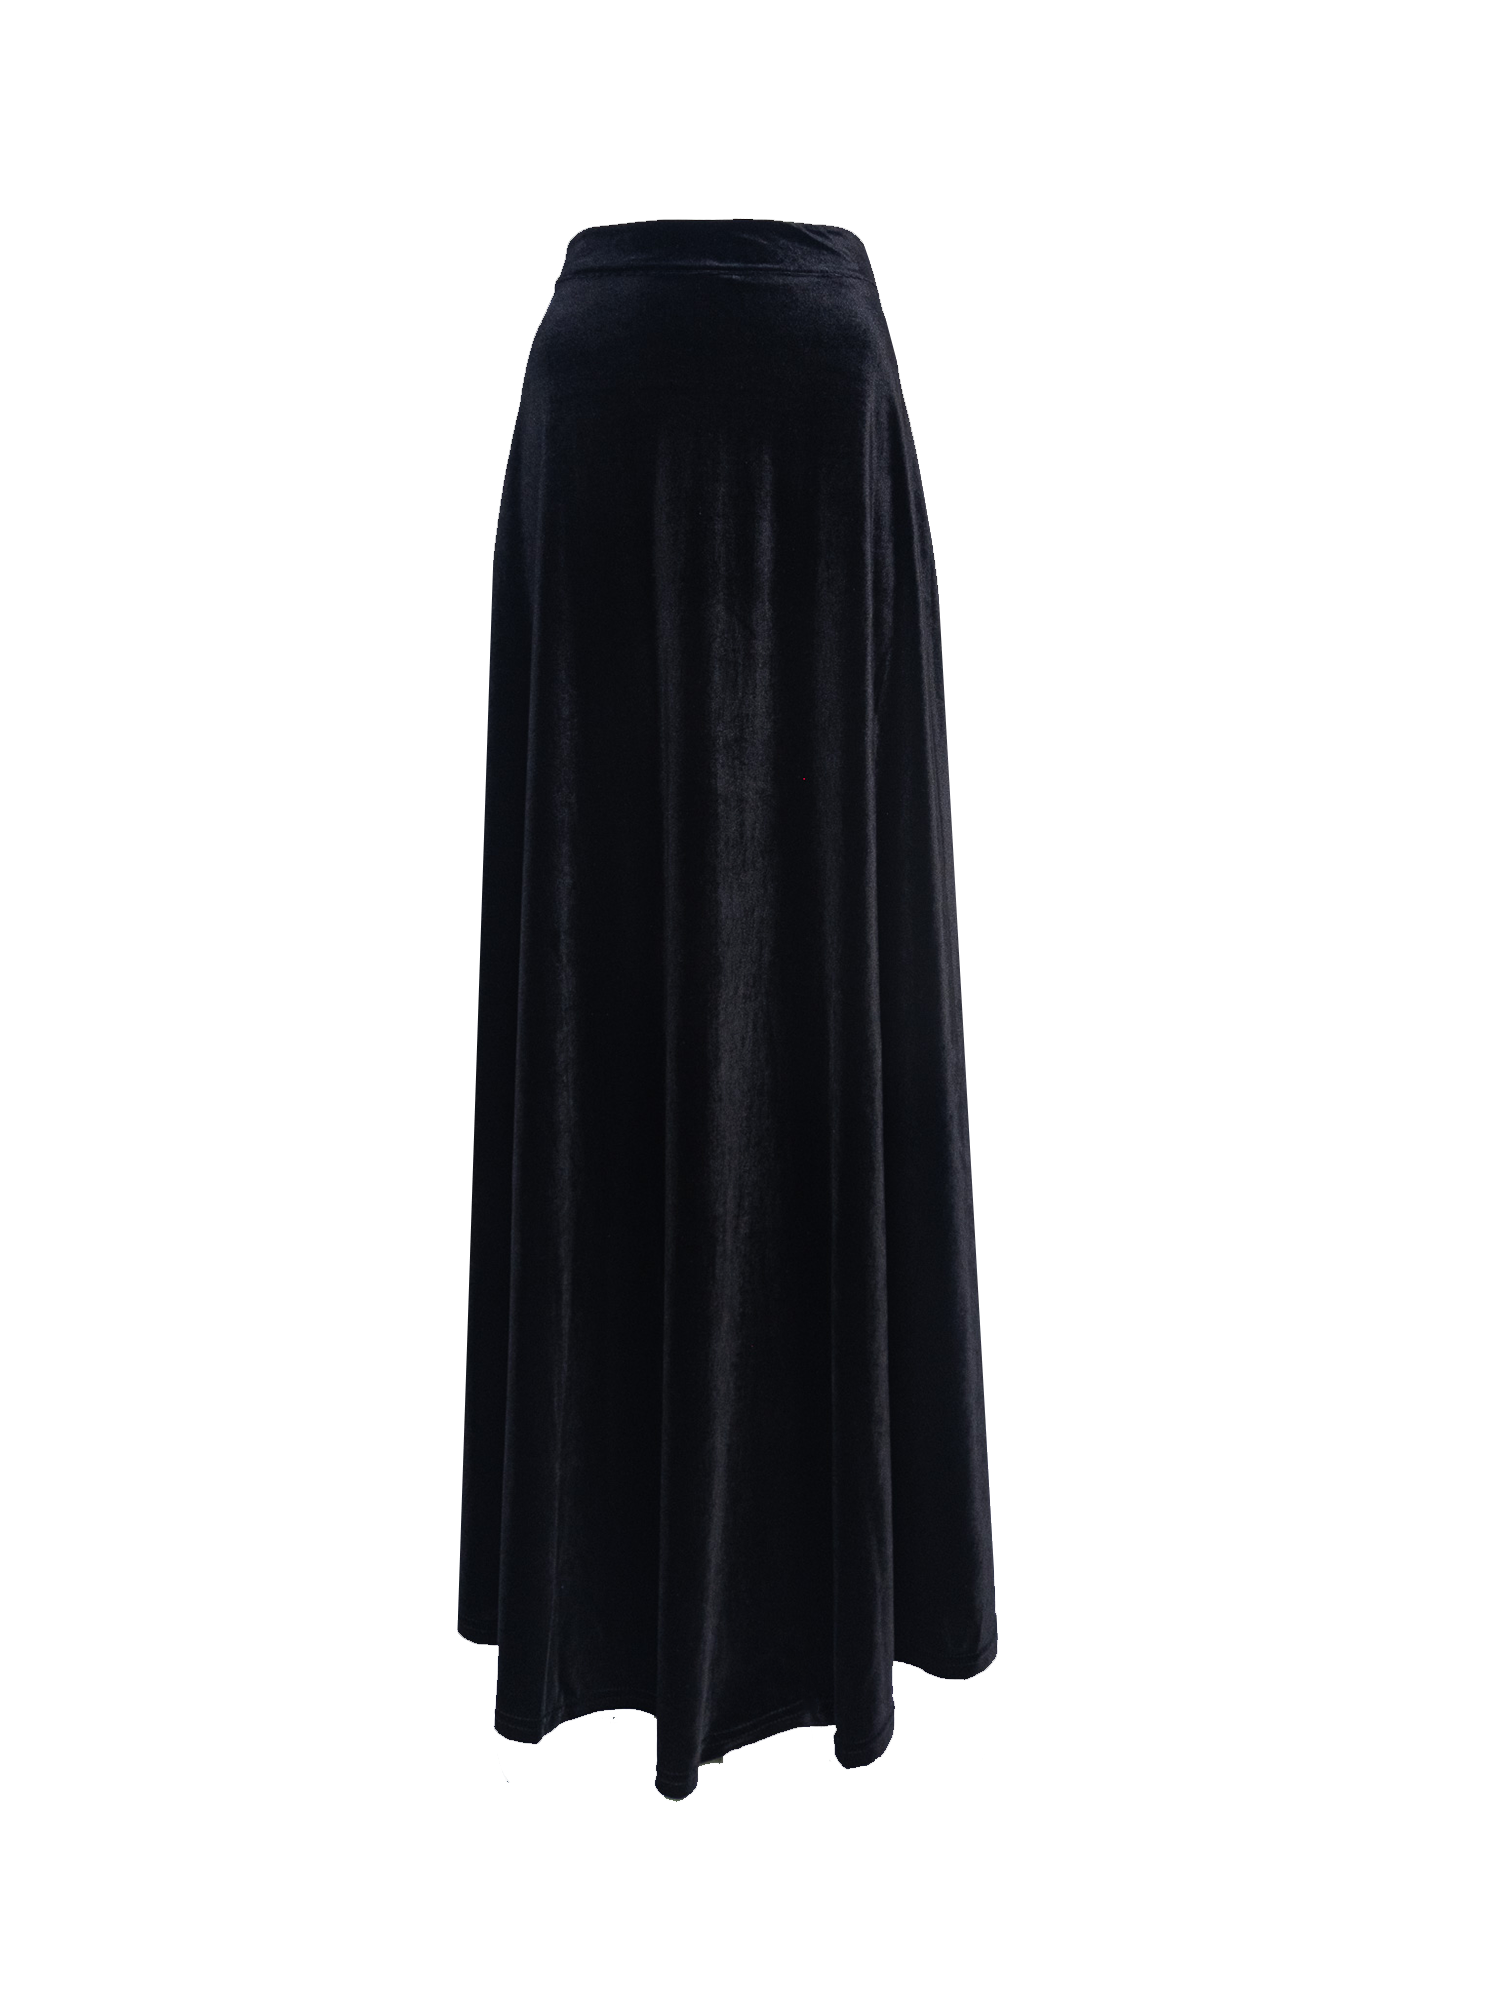 TOSCA - long chenille black maxi skirt